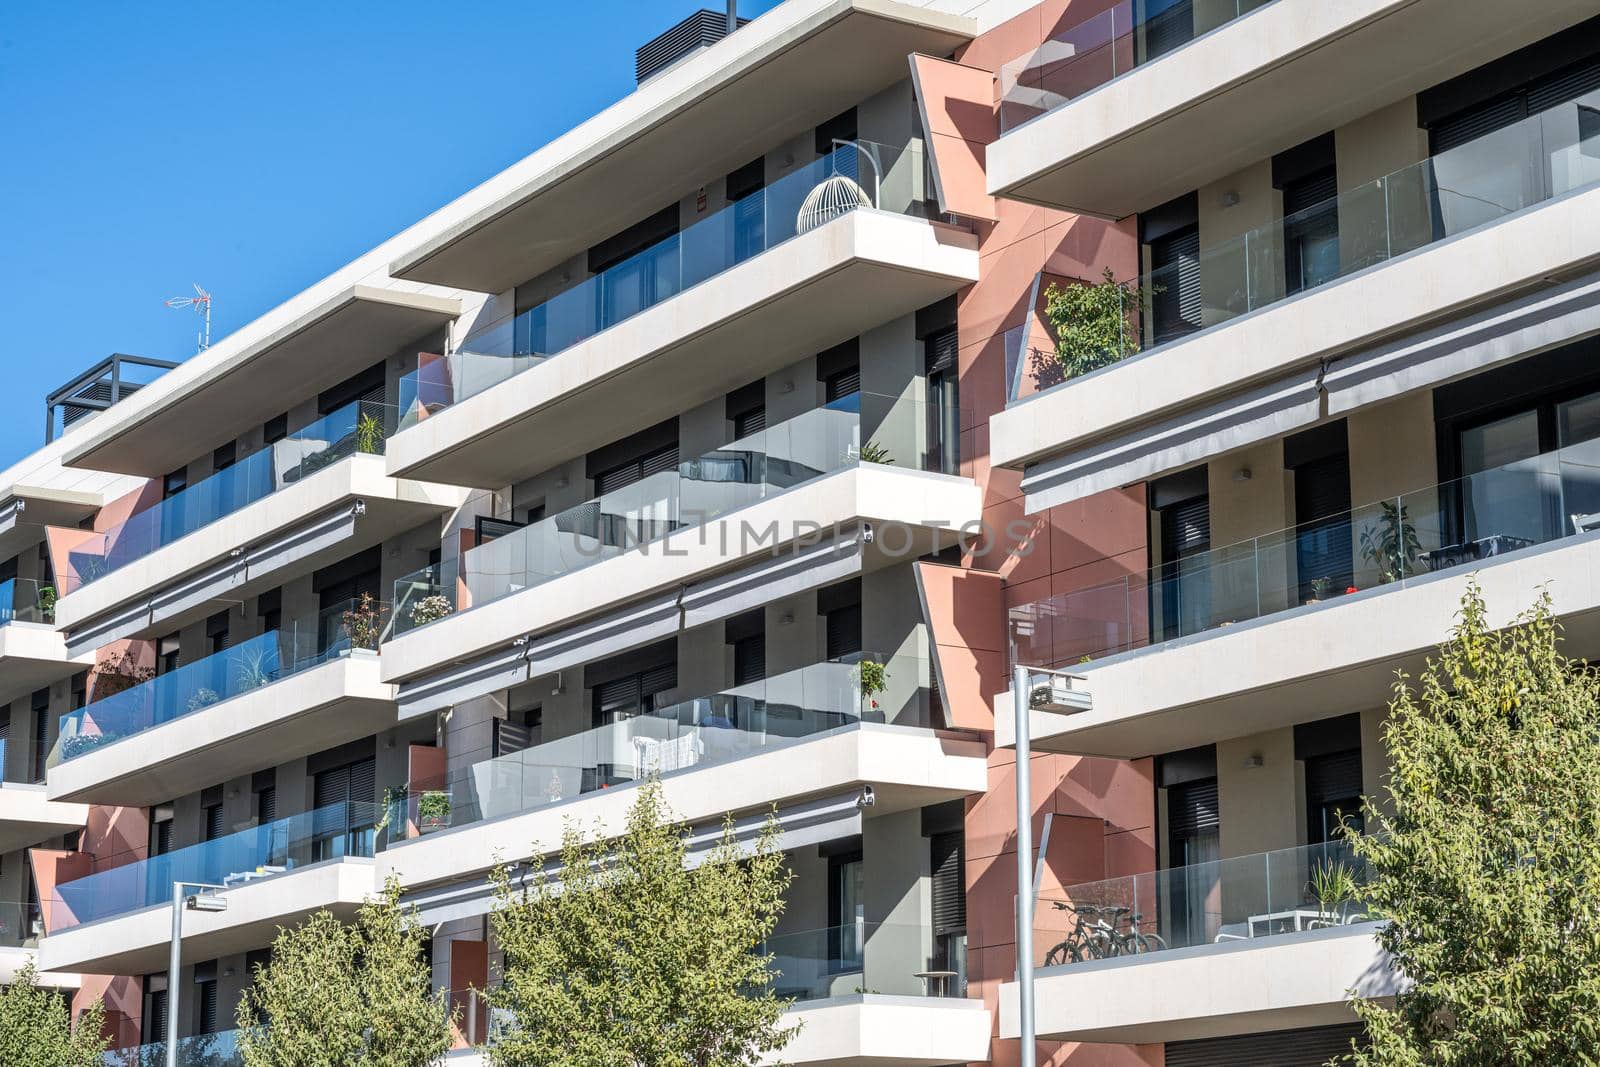 Modern apartment building seen in Barcelona, Spain